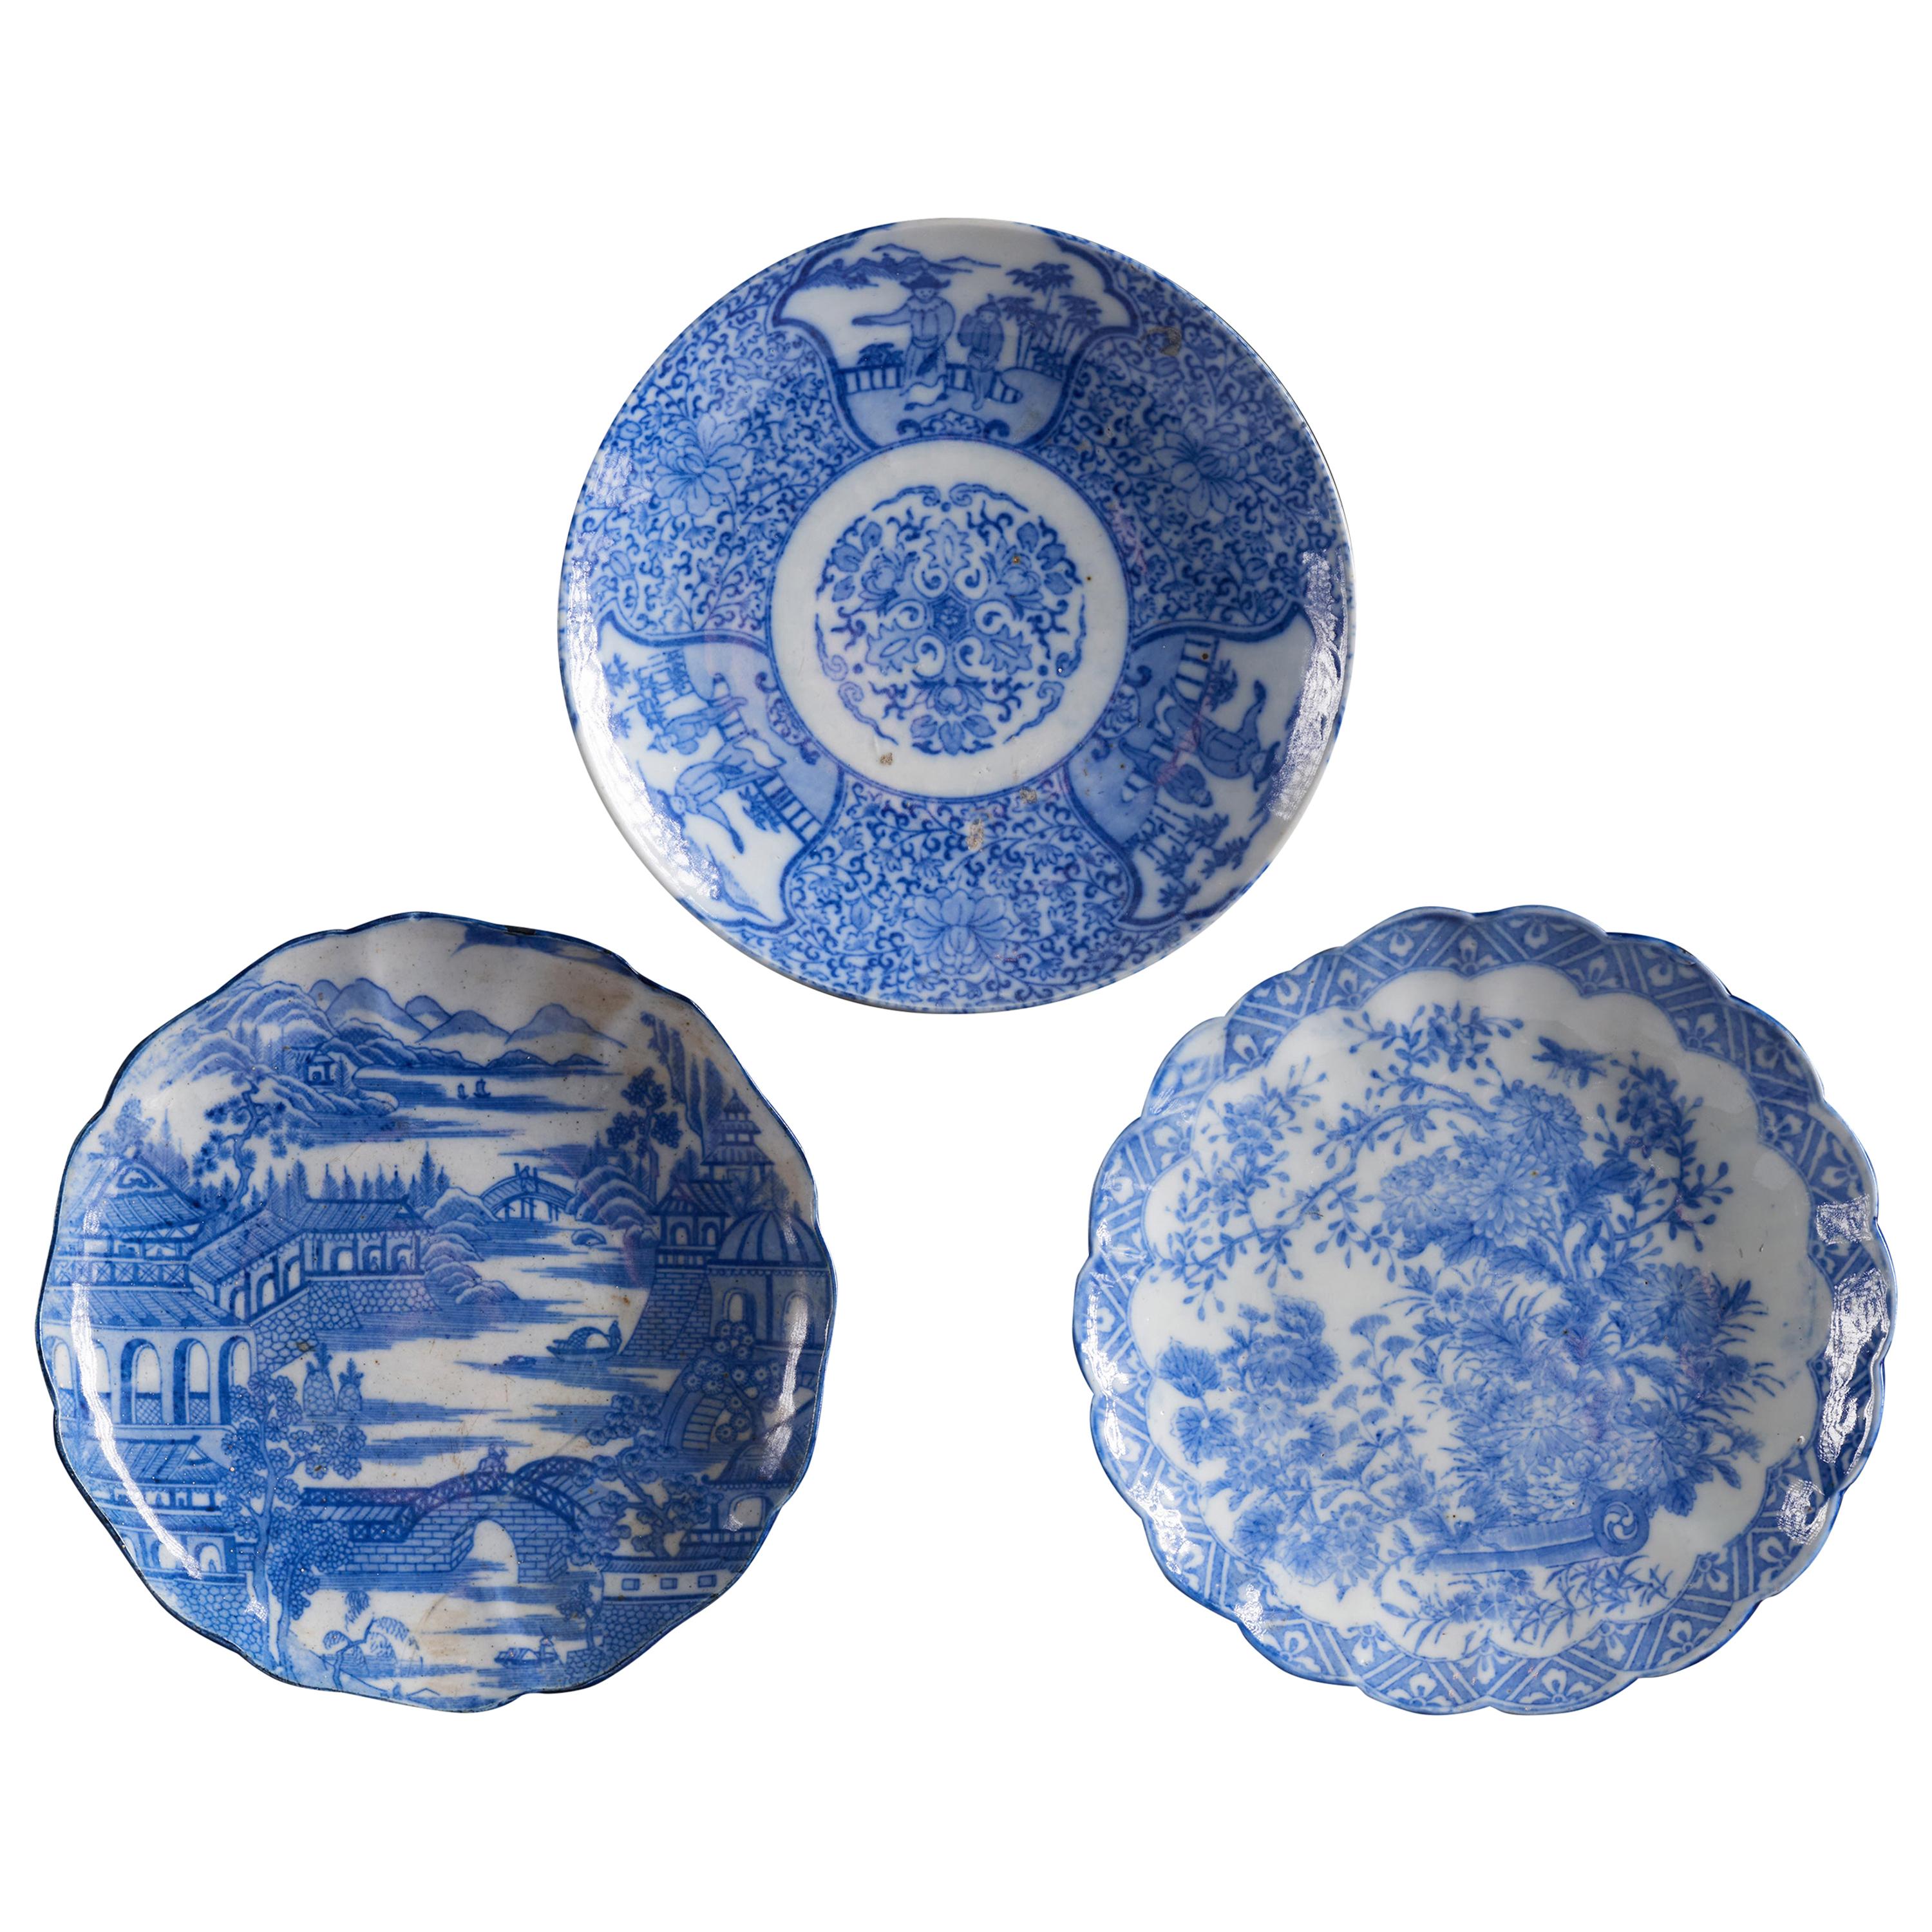 Stunning Set of 3 White Ceramic Plates with Ornate Indigo Blue Designs